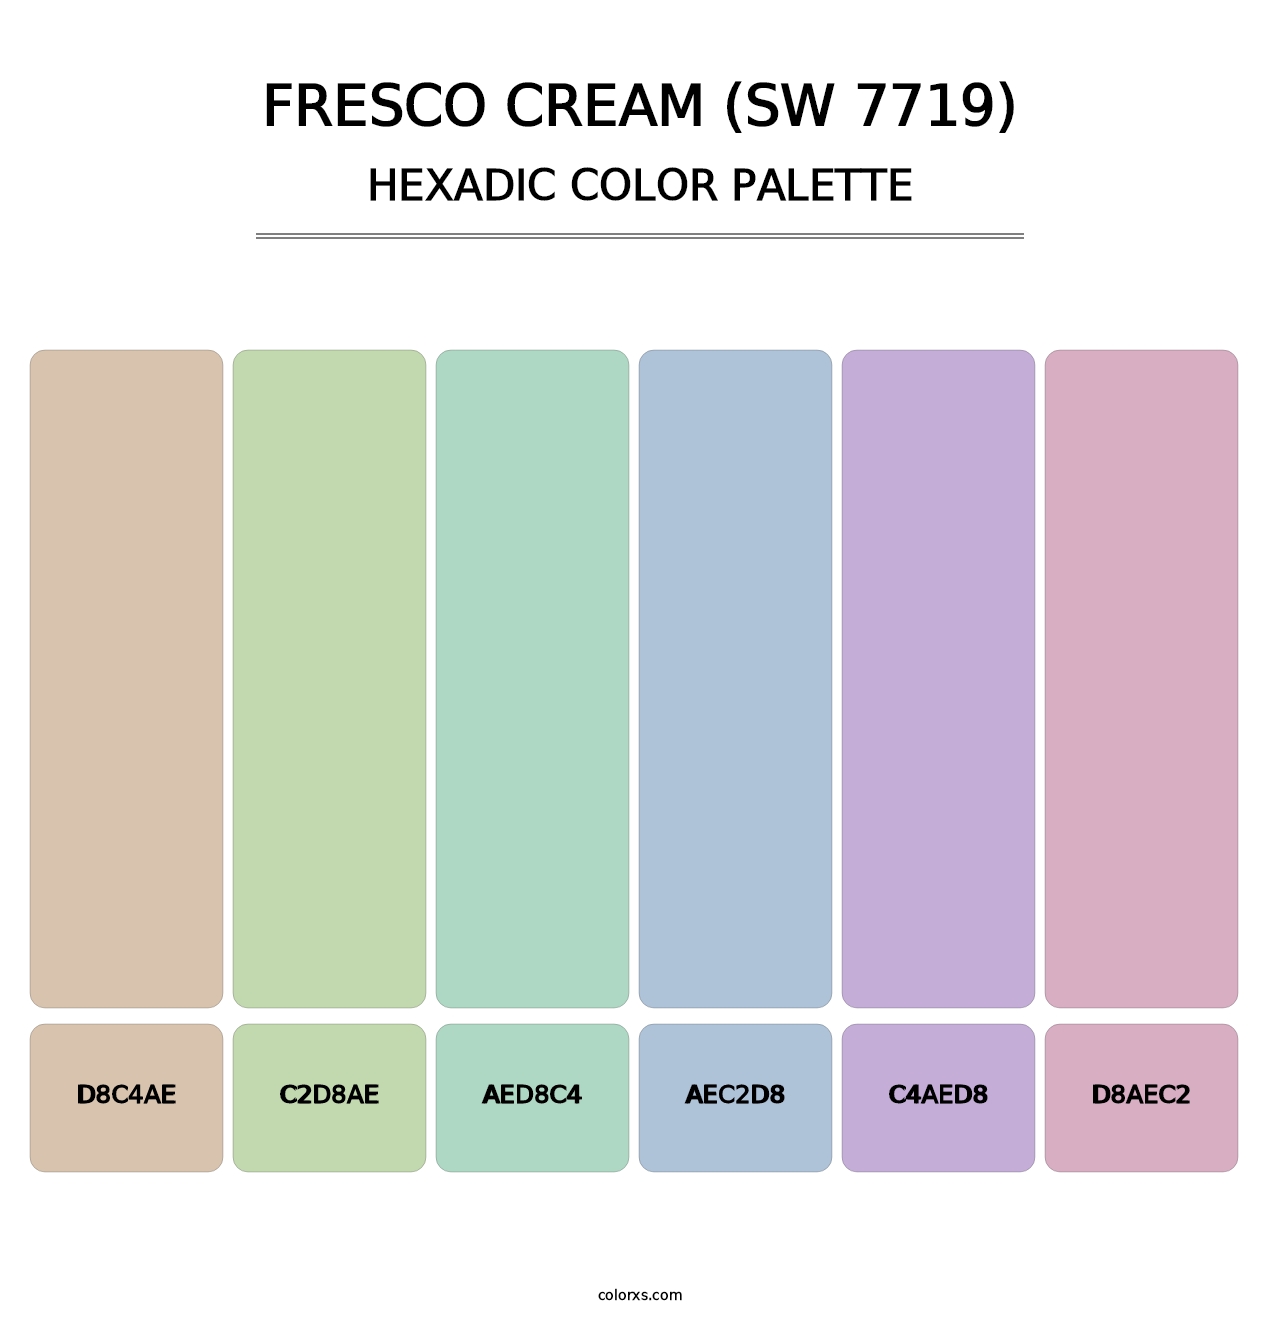 Fresco Cream (SW 7719) - Hexadic Color Palette